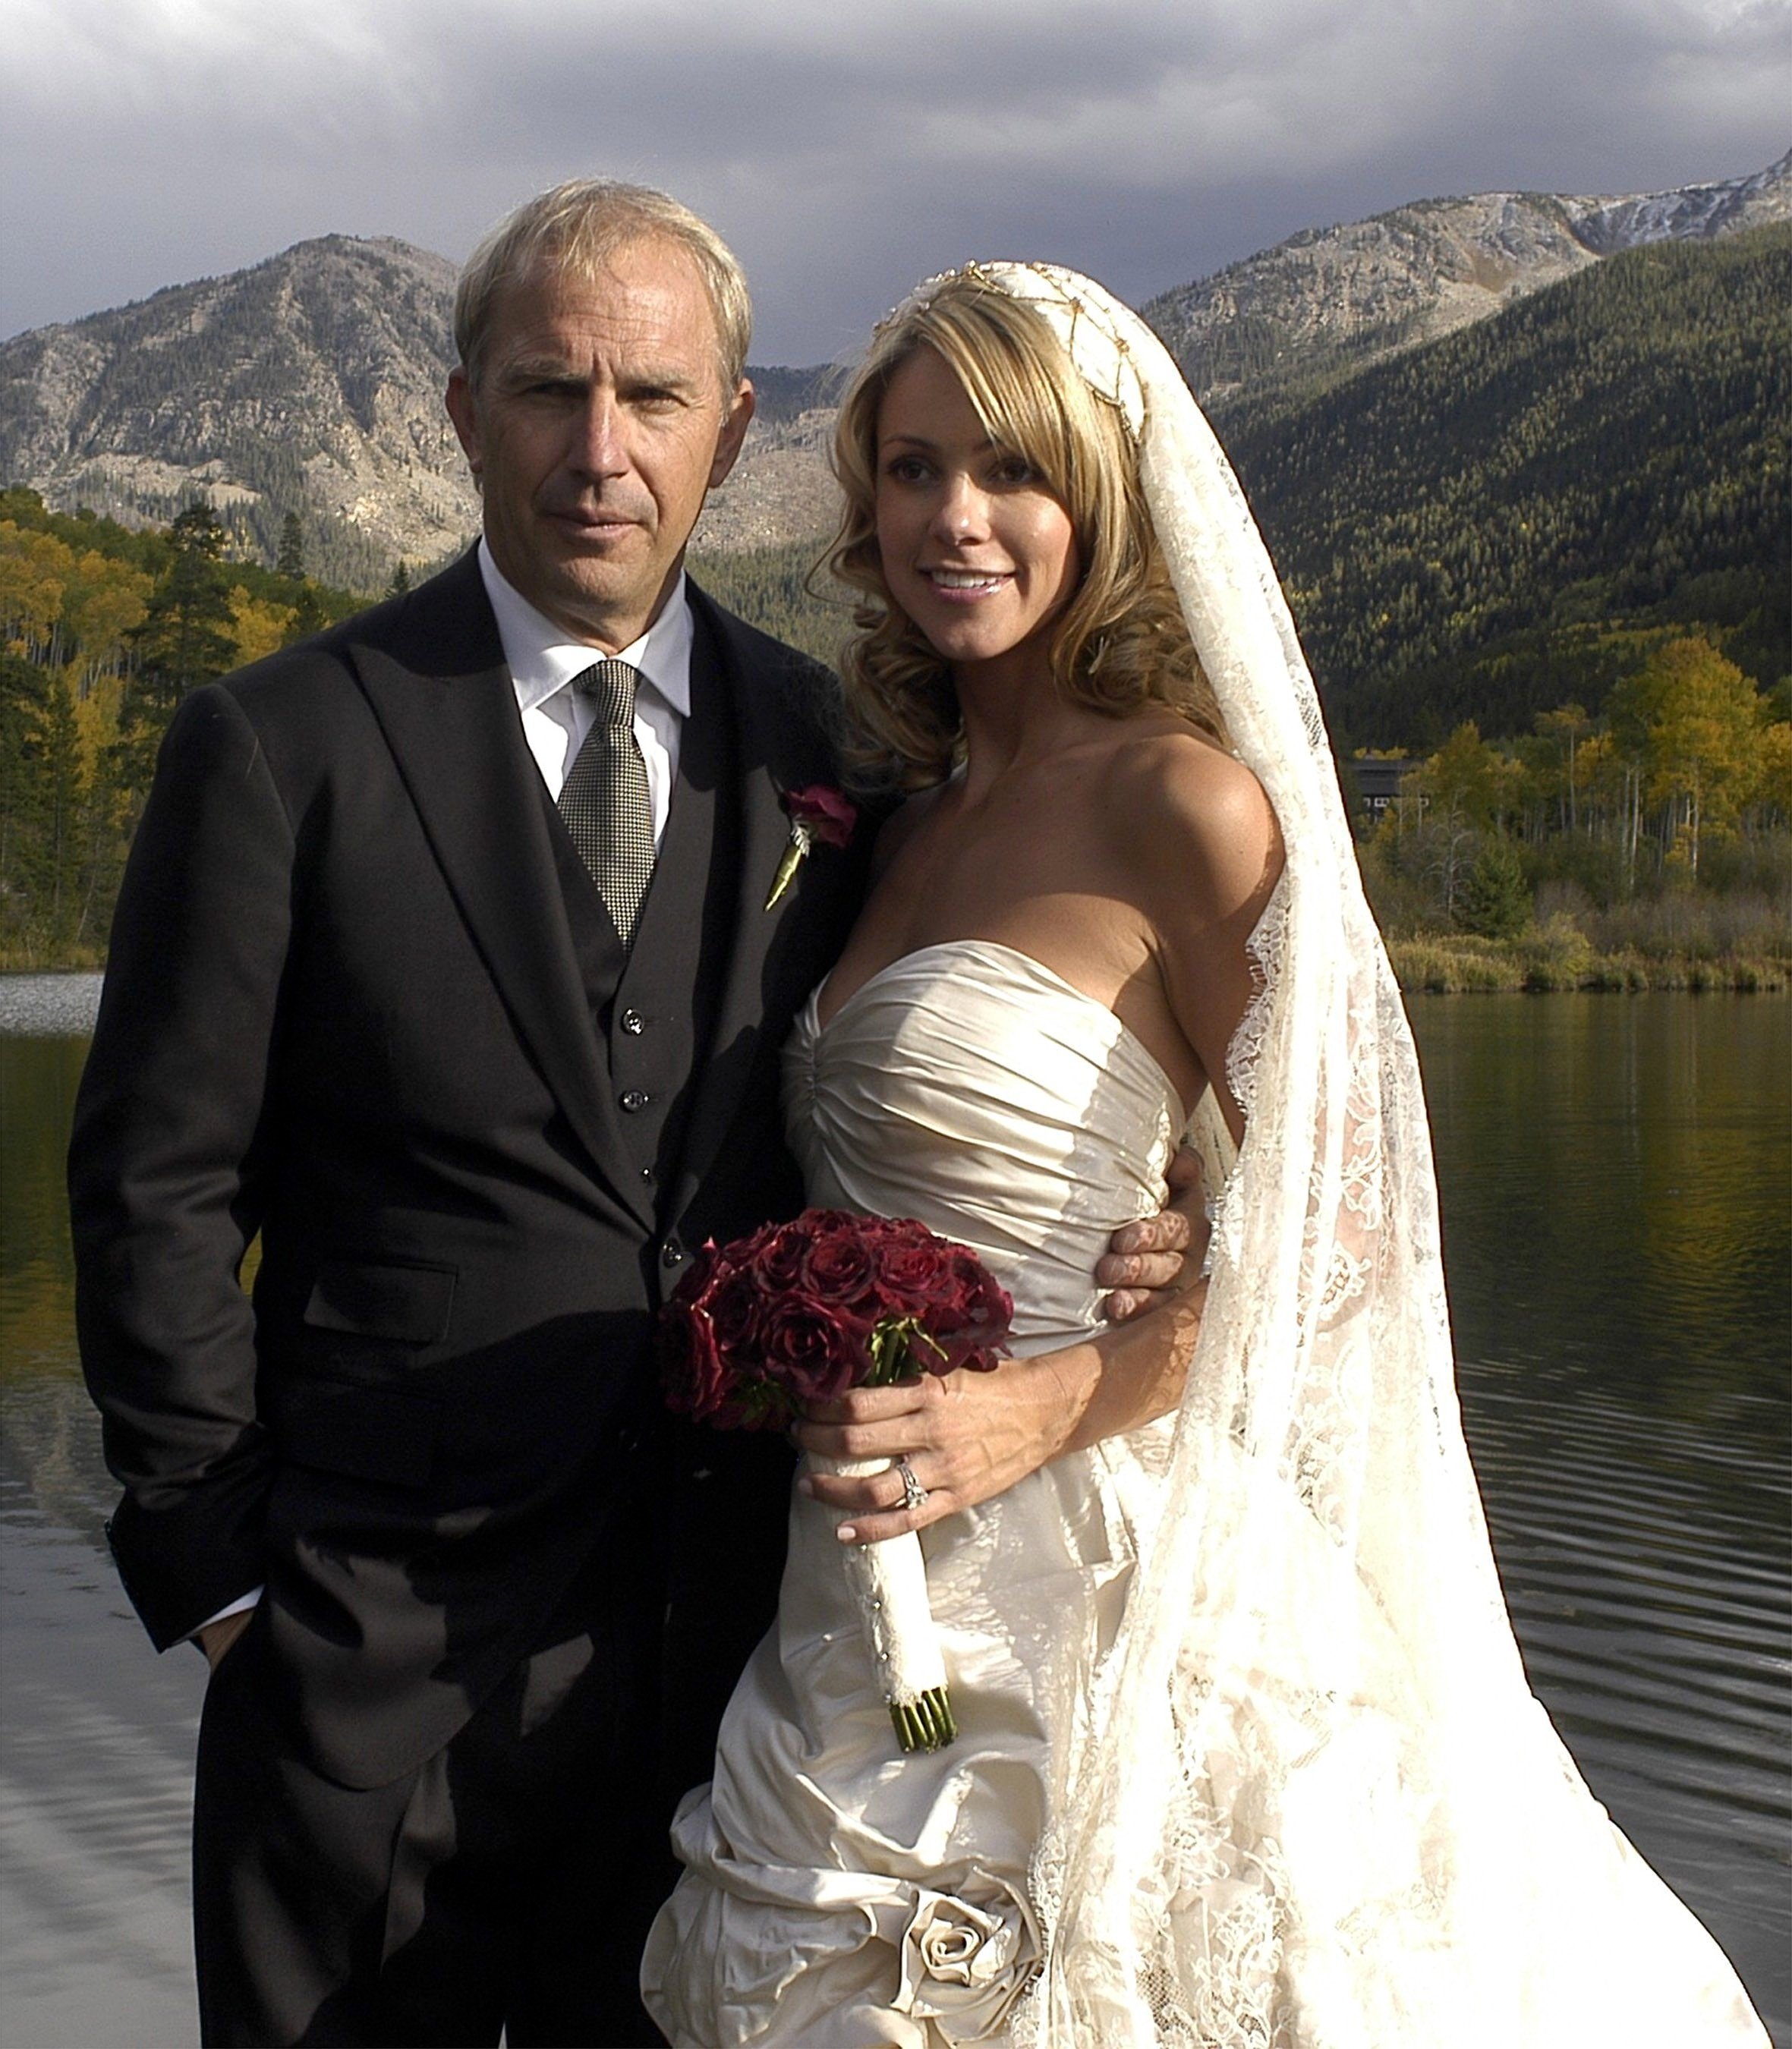 Costner and Baumgartner married at the property in Aspen, Colorado, in September 2004